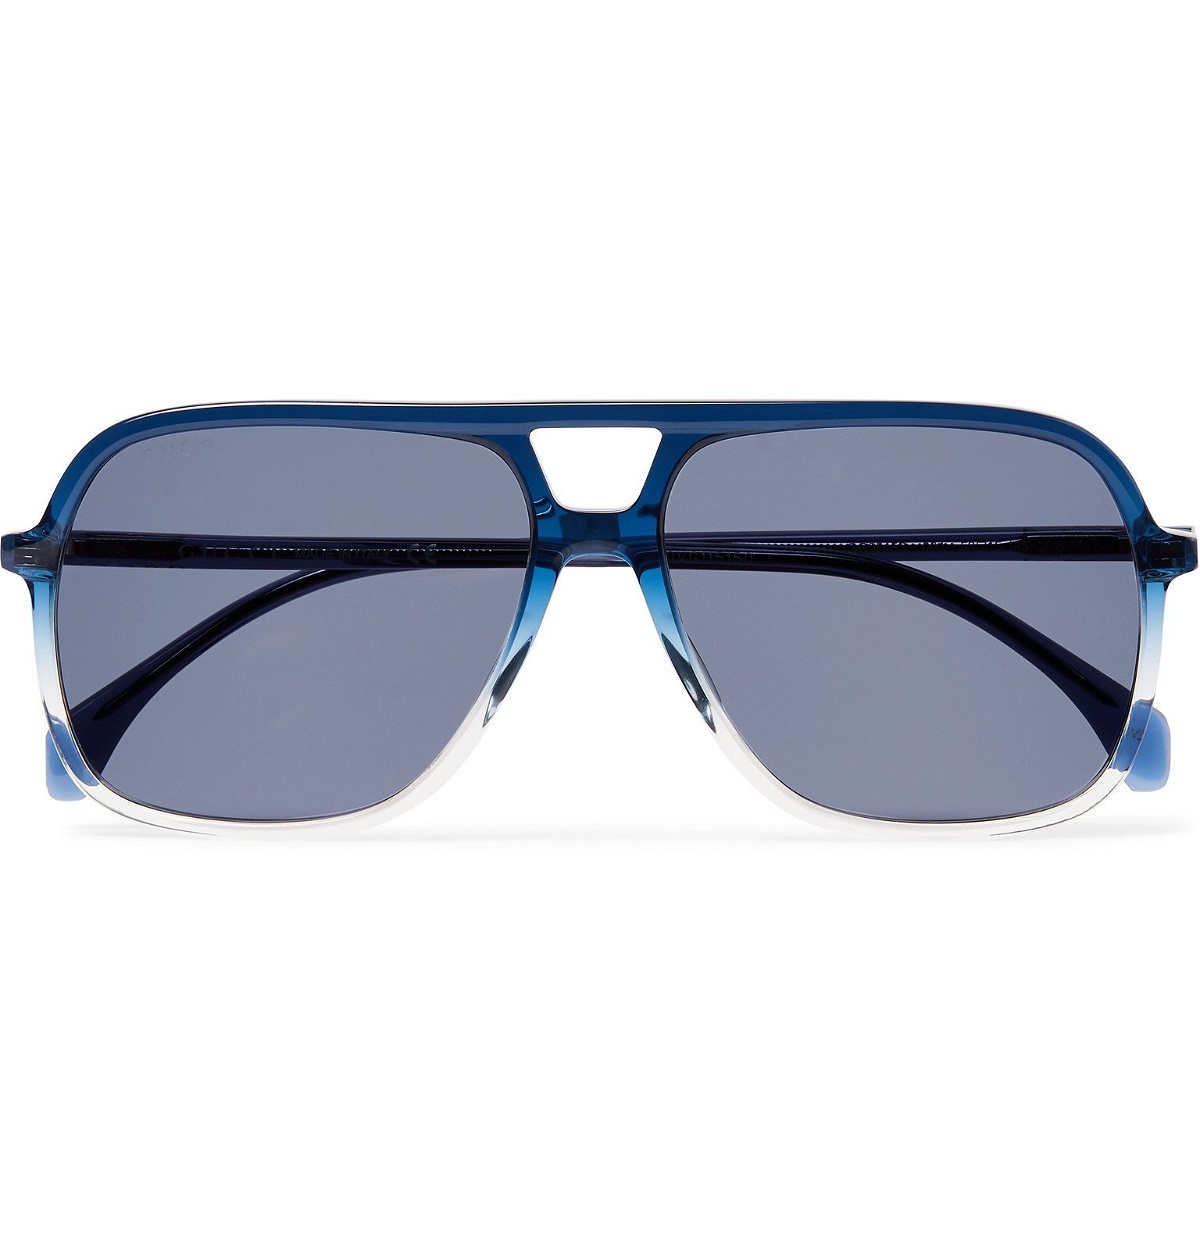 Gucci GG1215S Sunglasses Women Violet Blue Narrow 51mm New 100% Authentic |  eBay